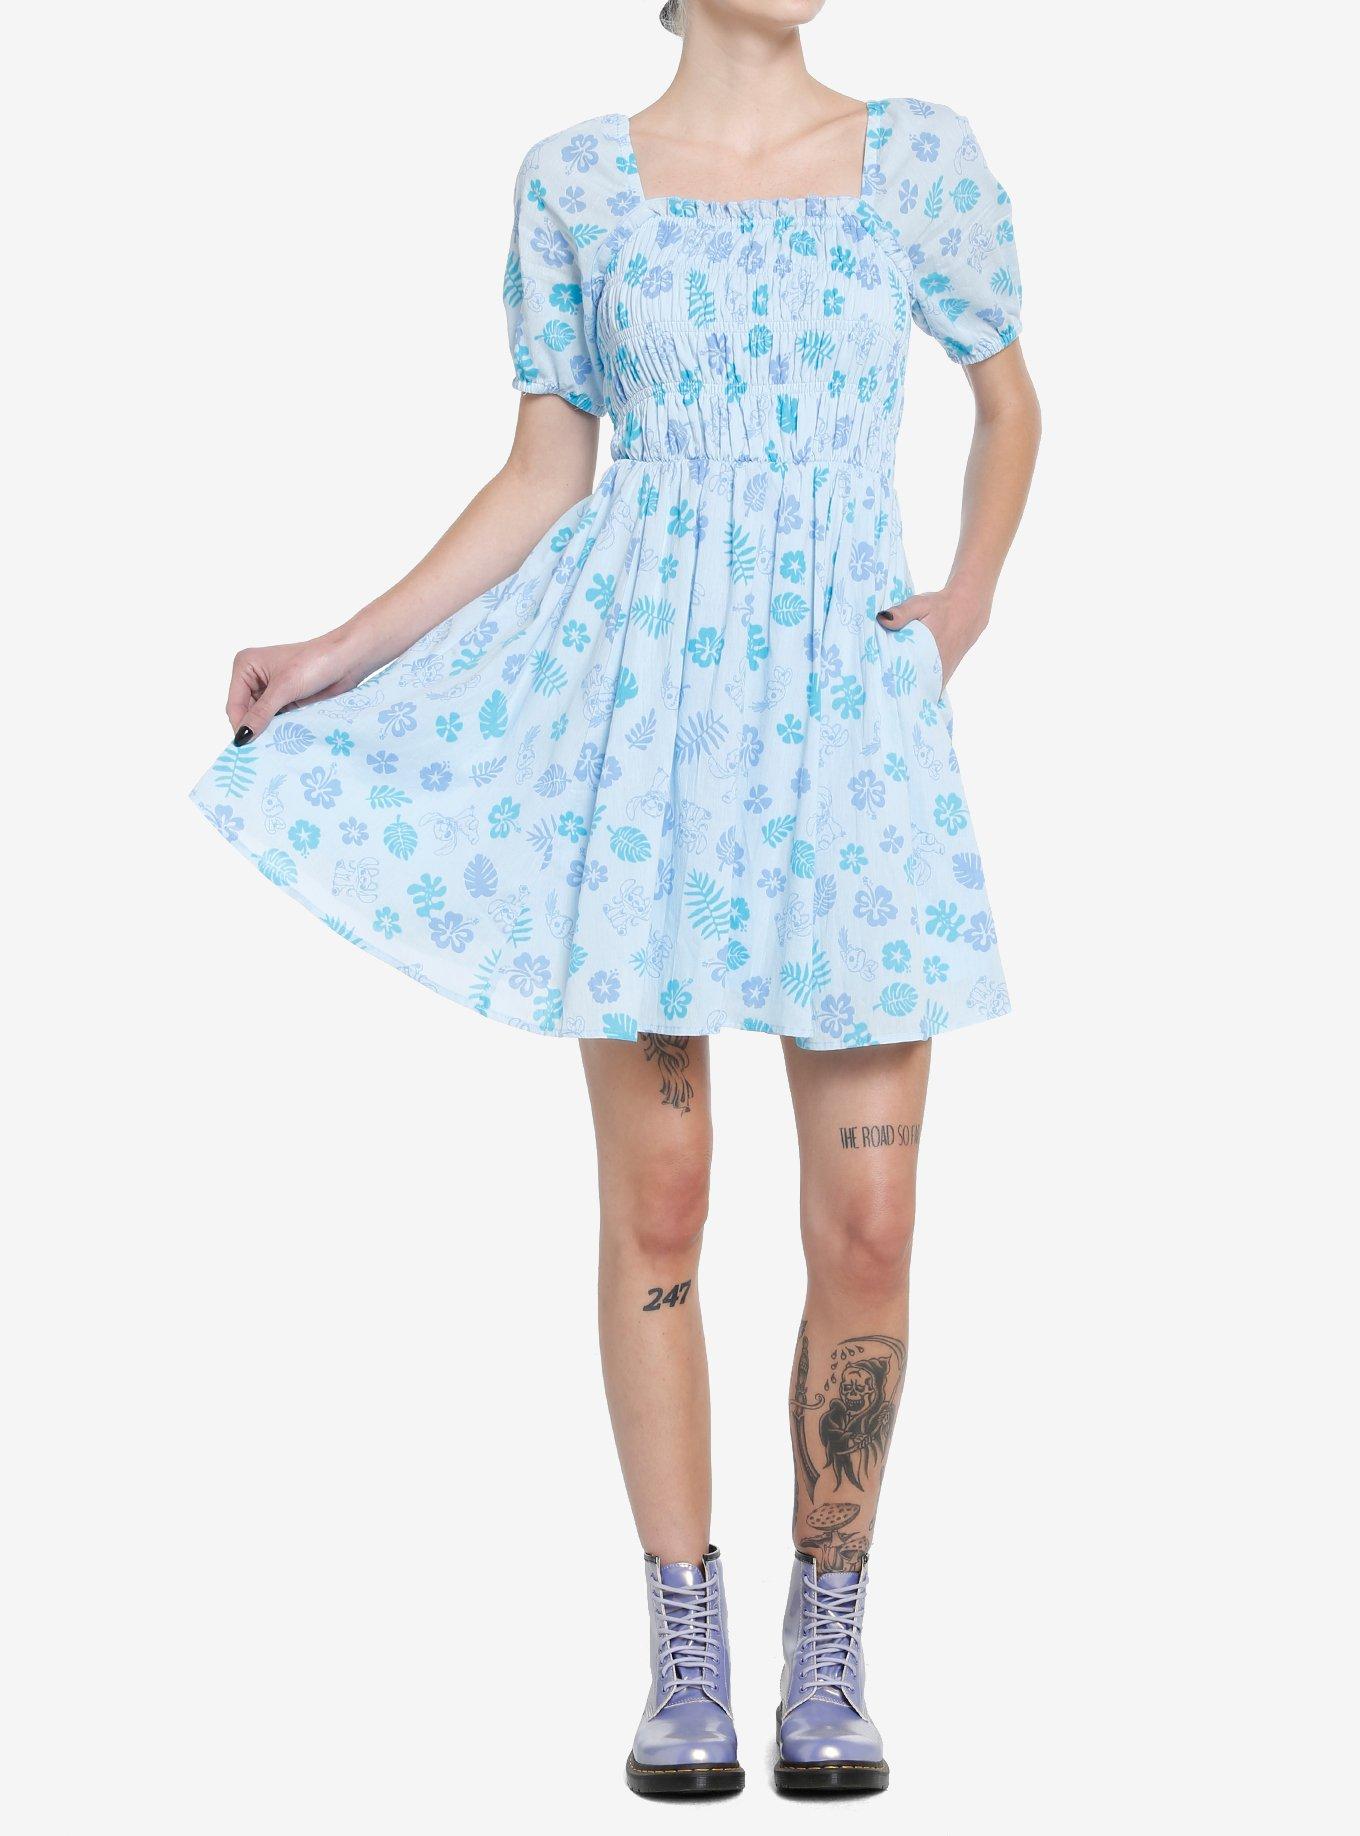 Disney Stitch Floral Smocked Dress, BLUE, alternate